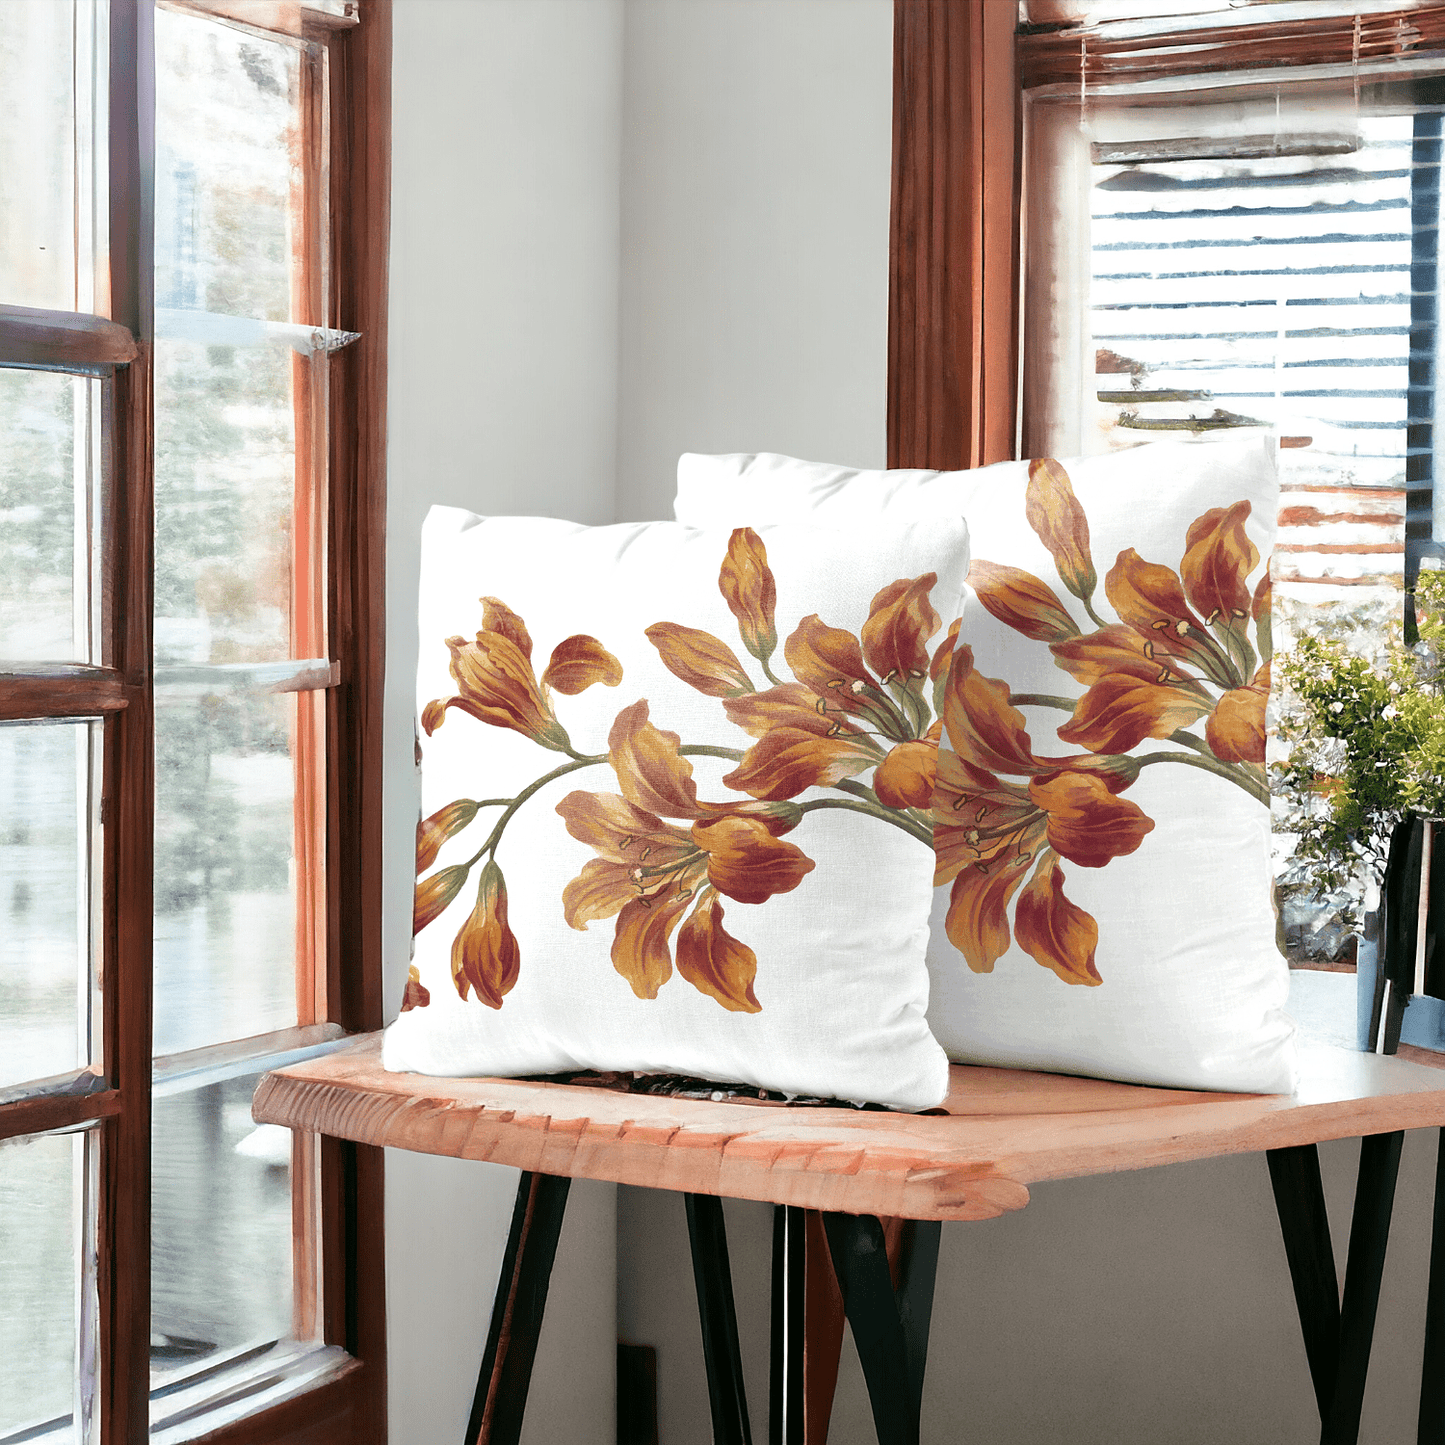 Amber Lilies Velvet Cushion Cover - Set of 2